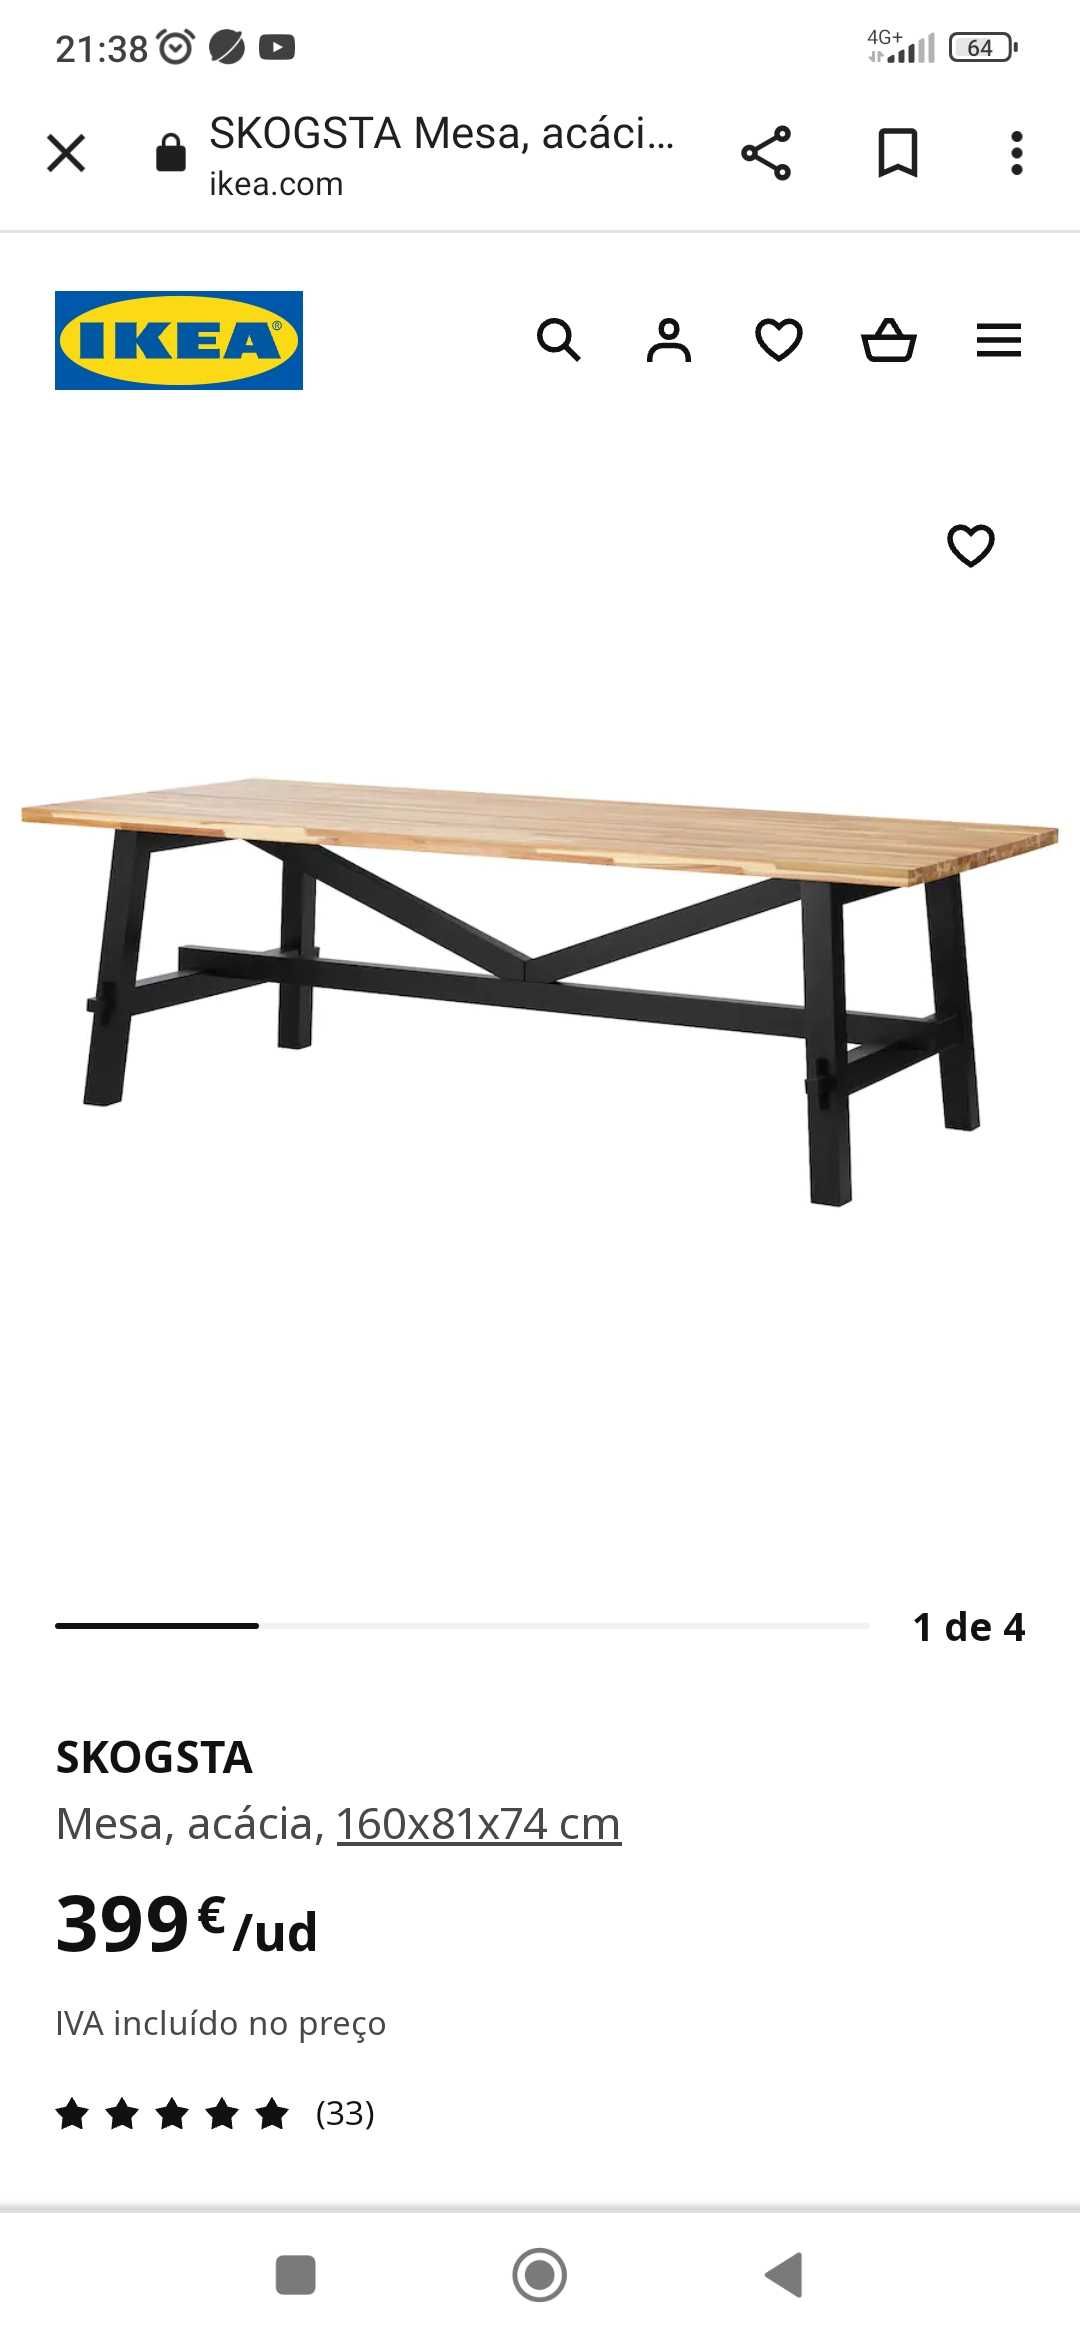 Mesa do IKEA modelo skogsta